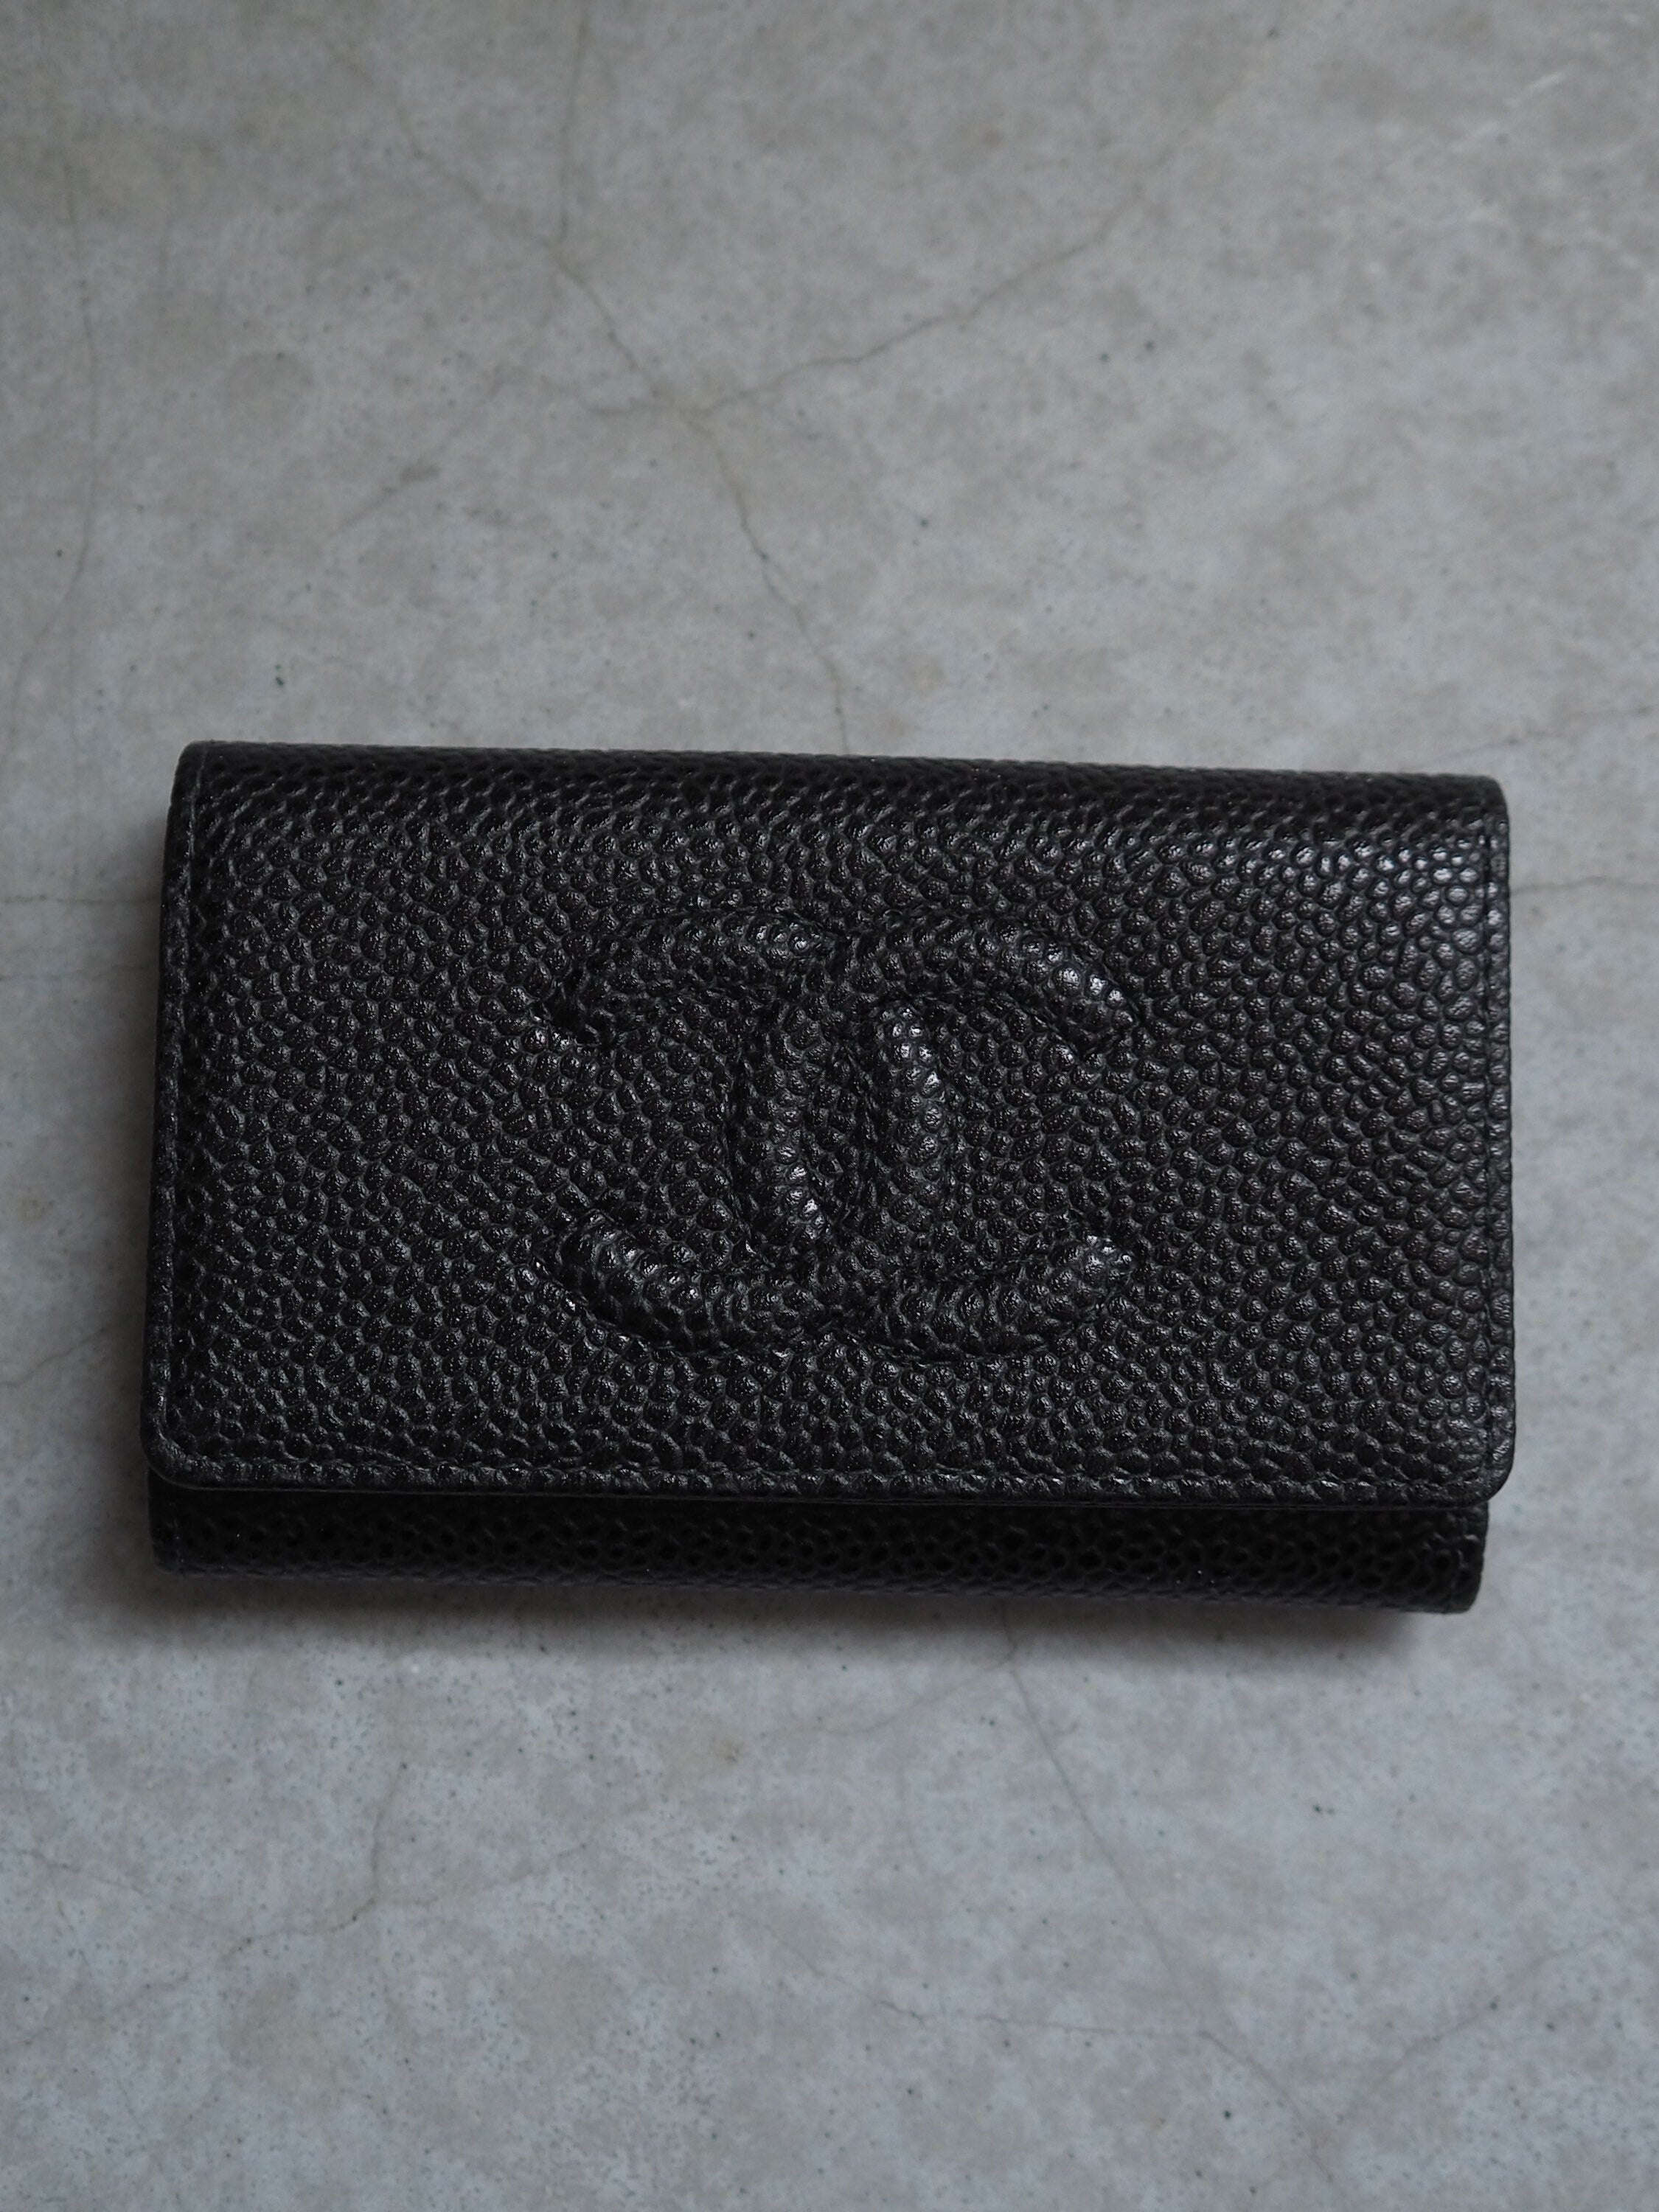 CHANEL COCO Mark Key Case Chain Caviar Skin Leather Black Authentic Vintage Box